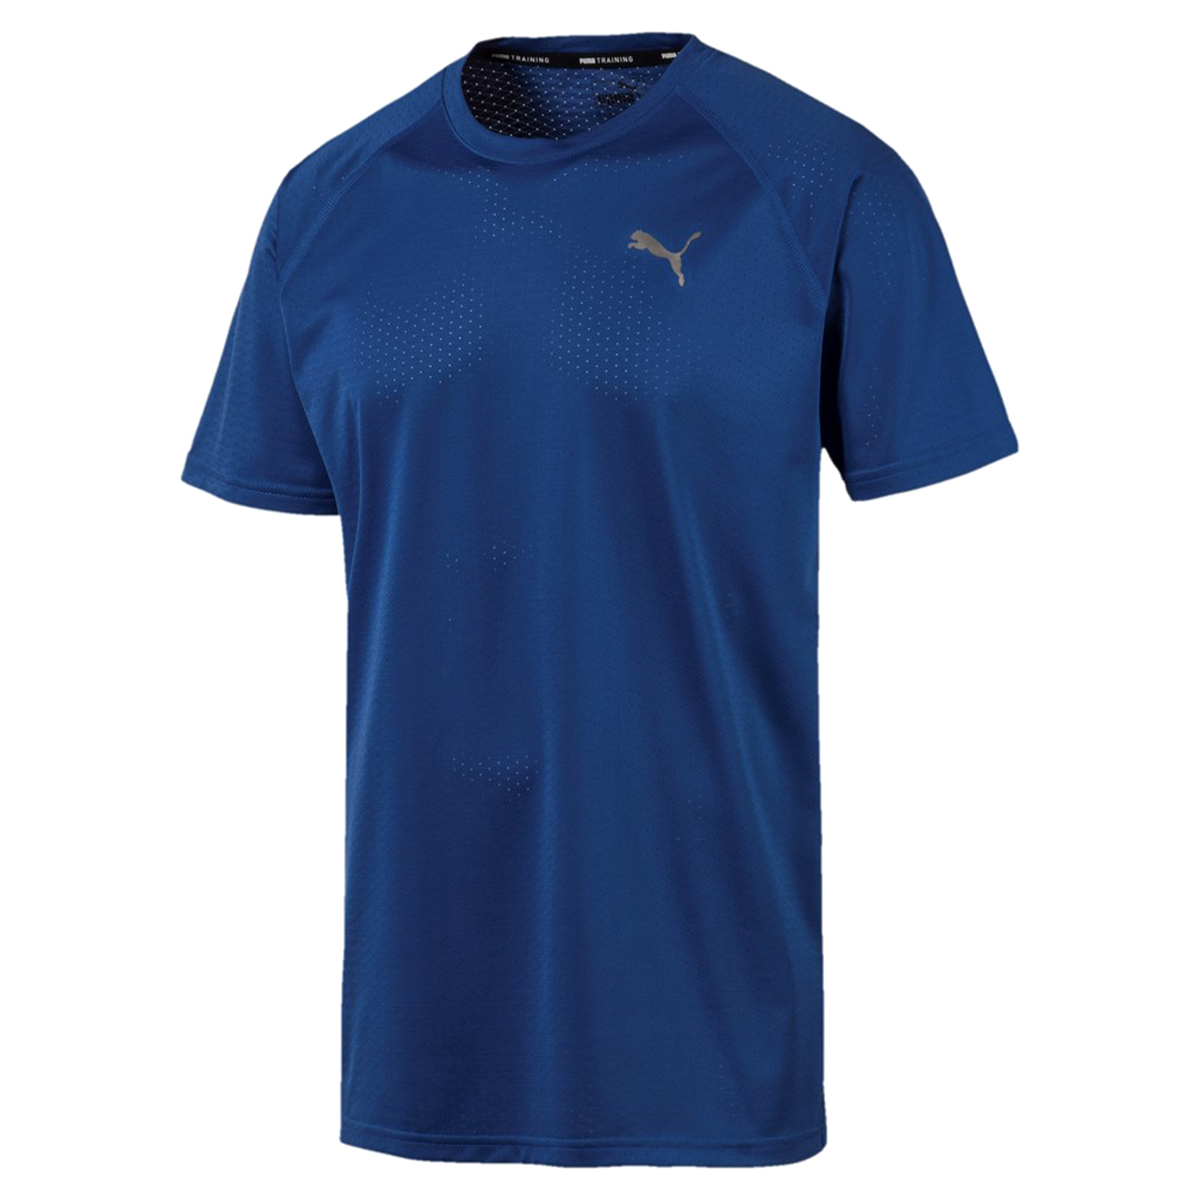 PUMA SS Tech Tee Herren T-shirt Sportswear 518389 05 blau